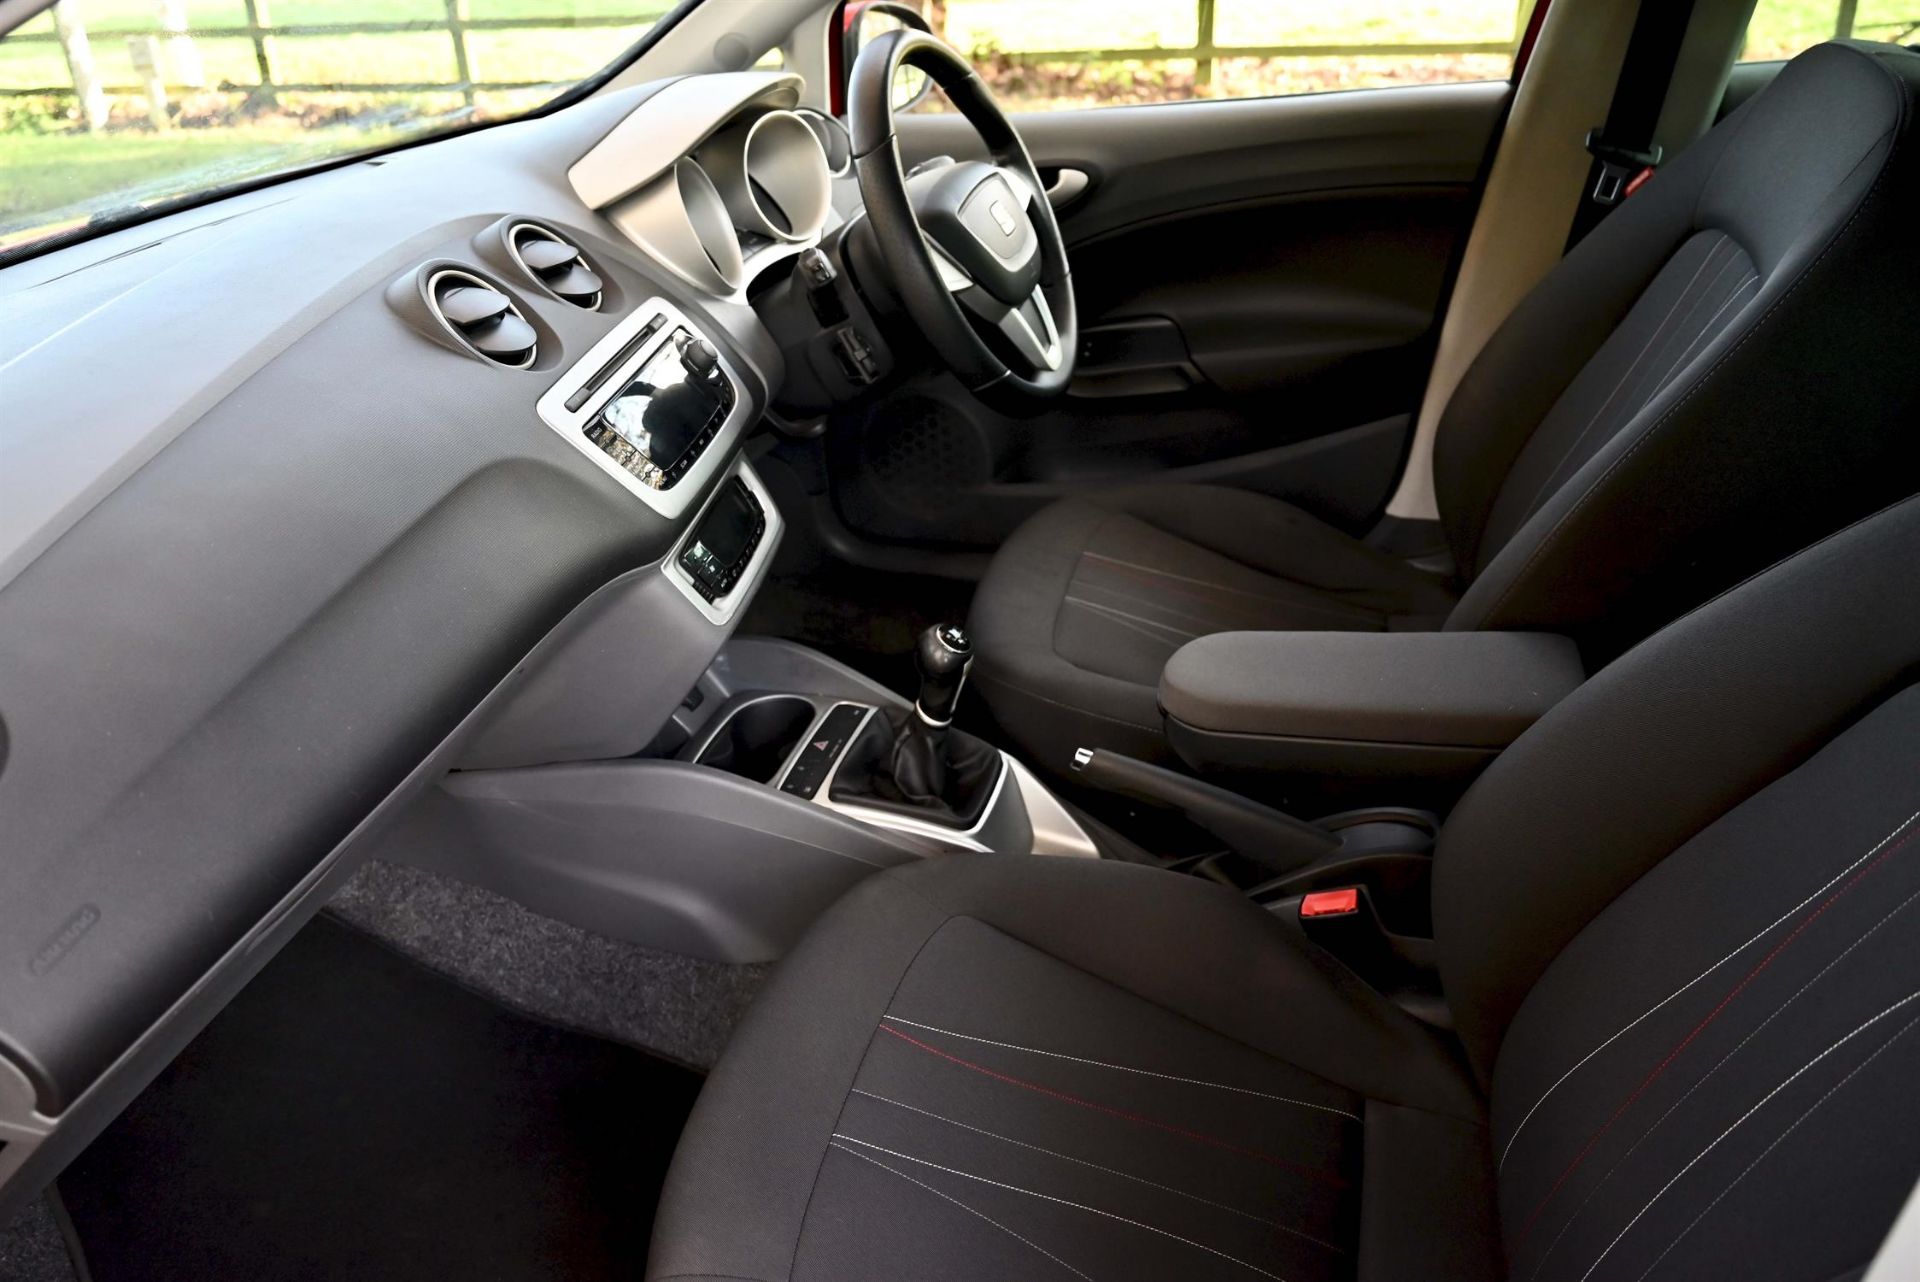 2012 SEAT Ibiza 1.4 SE 'COPA' Estate. Registration number AO61 XKX. Petrol, 5-Speed Manual. - Image 8 of 16